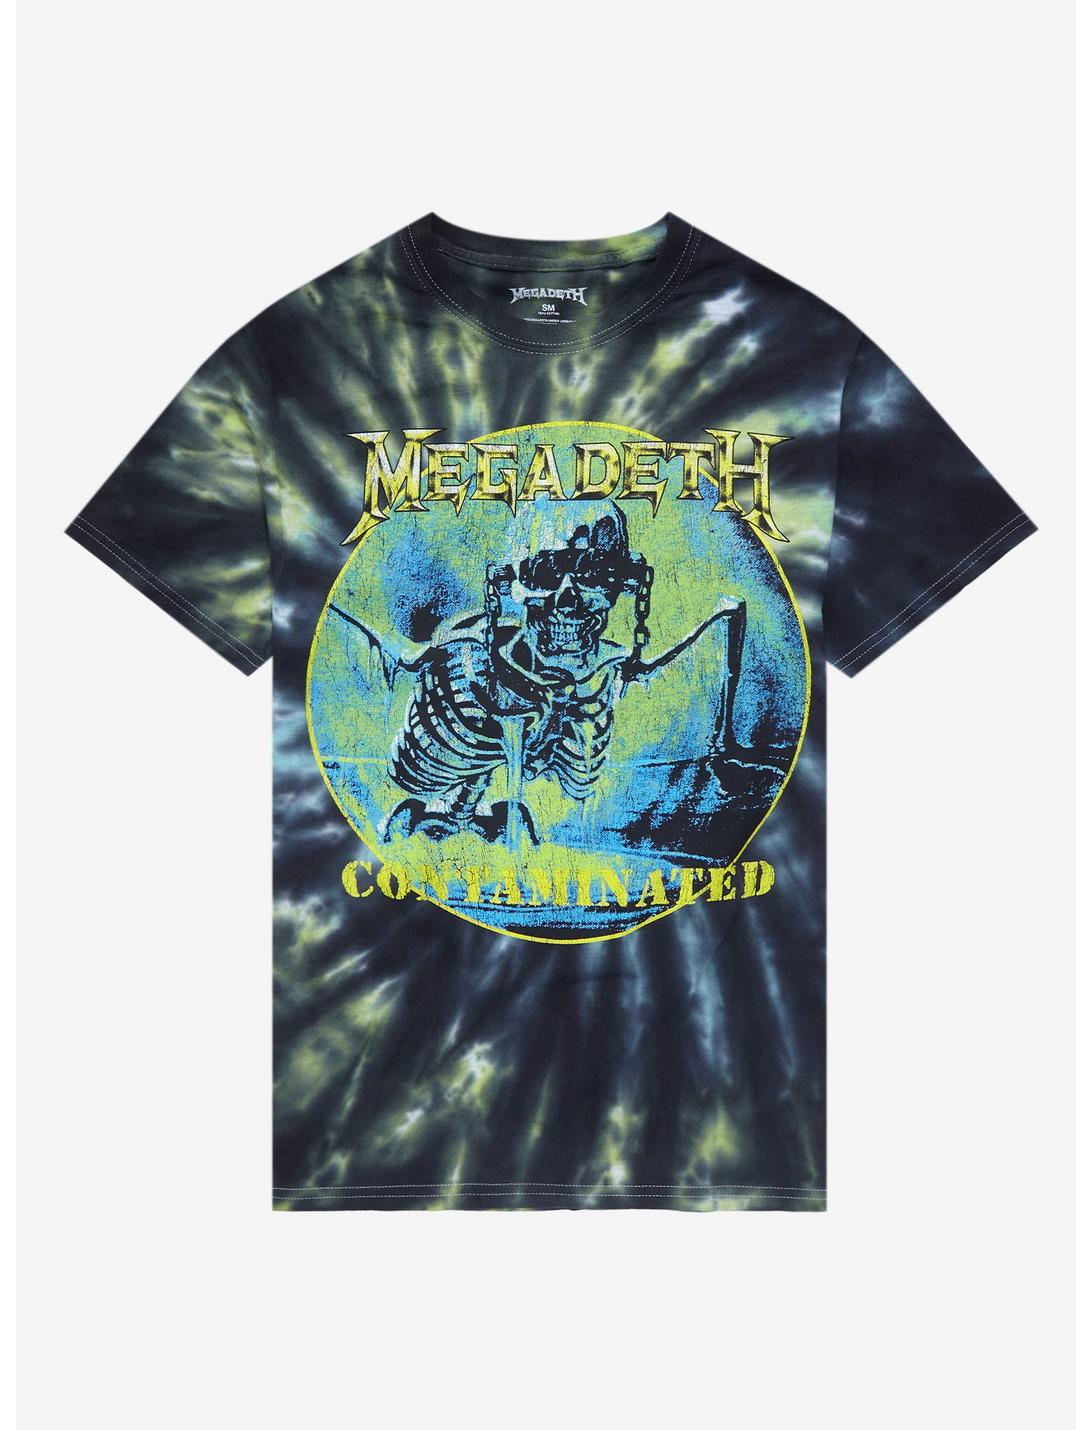 Megadeth Contaminated Tie-Dye Boyfriend Fit Girls T-Shirt, MULTI, hi-res